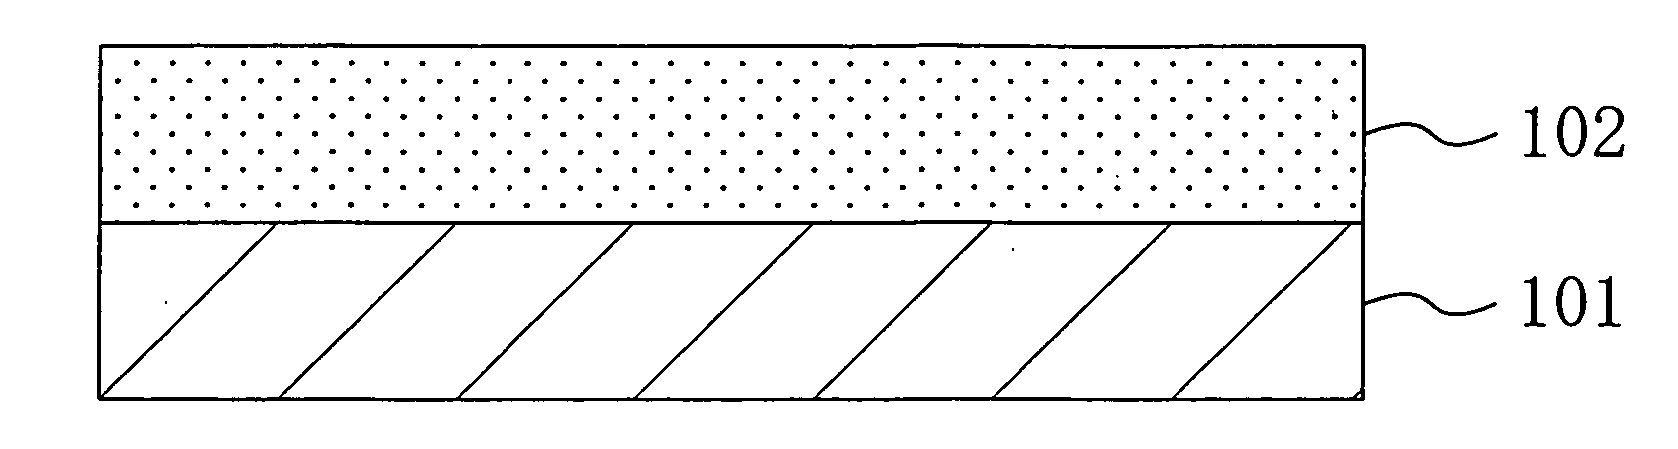 Pattern formation method